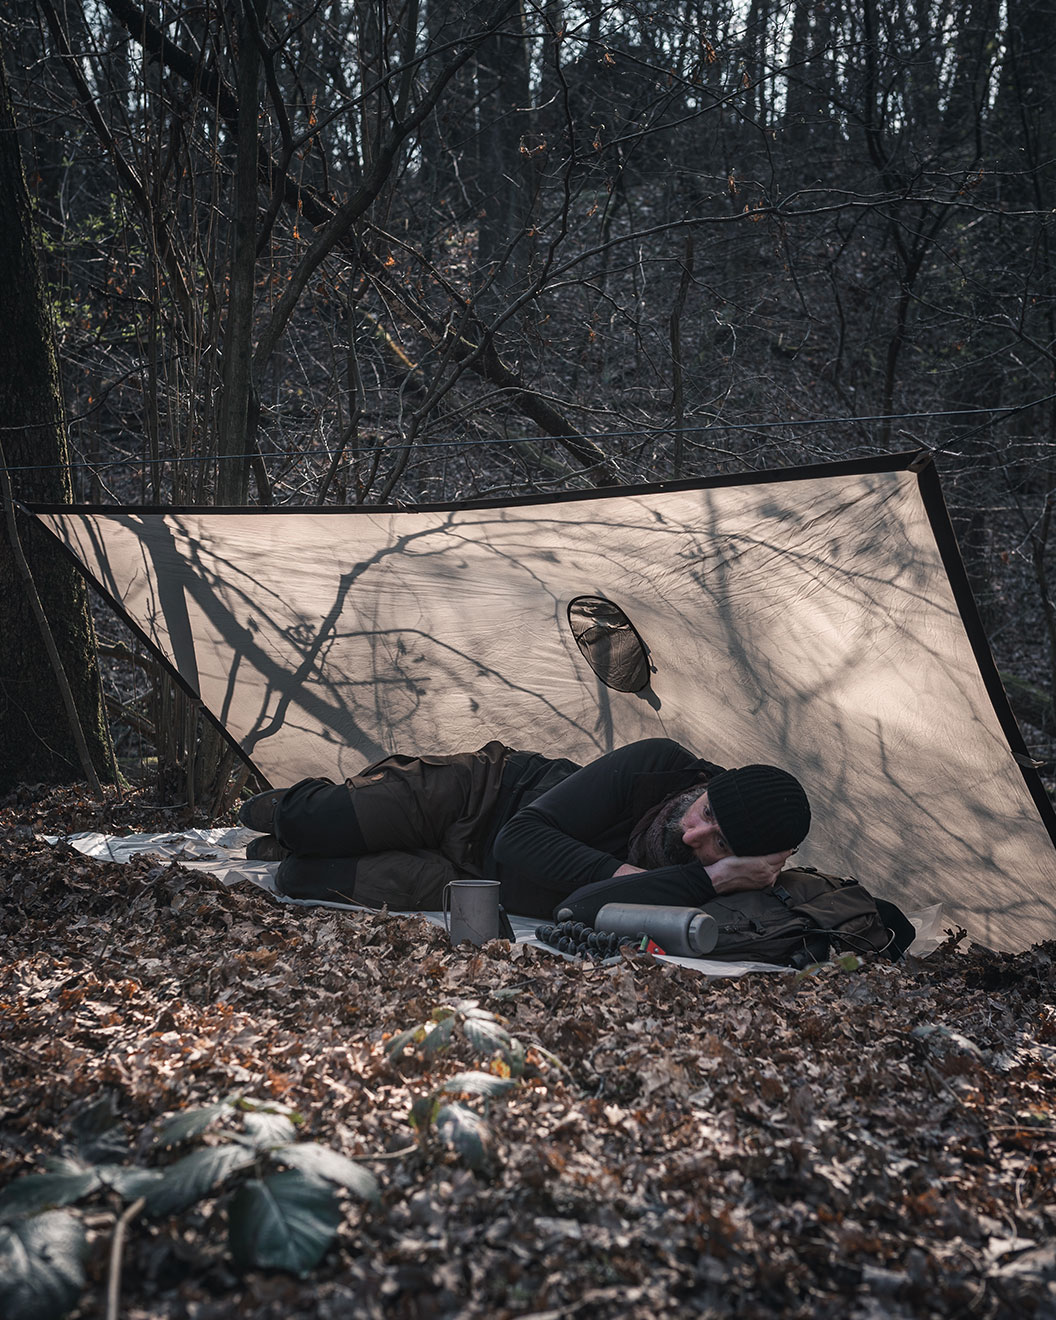 How to bushcraft: Bushcraft survival expert Alex Wander lying underneath a tarpaulin in the forest